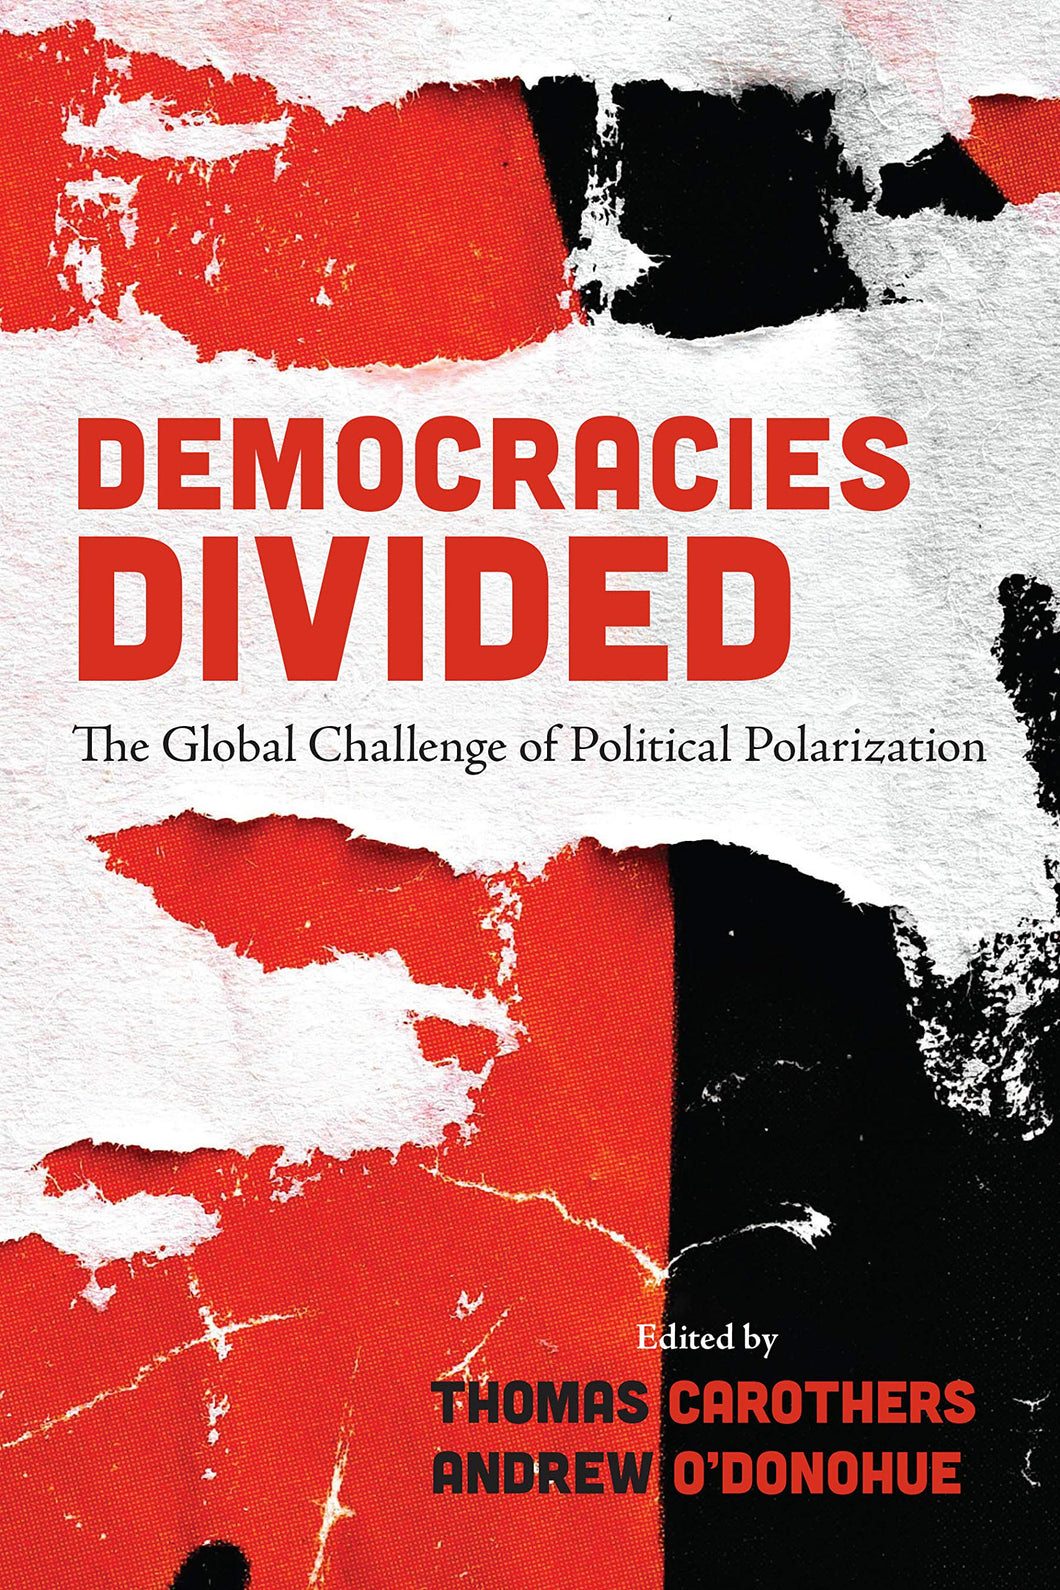 Democracies Divided : The Global Challenge of Political Polarization ร้านหนังสือและสิ่งของ เป็นร้านหนังสือภาษาอังกฤษหายาก และร้านกาแฟ หรือ บุ๊คคาเฟ่ ตั้งอยู่สุขุมวิท กรุงเทพ